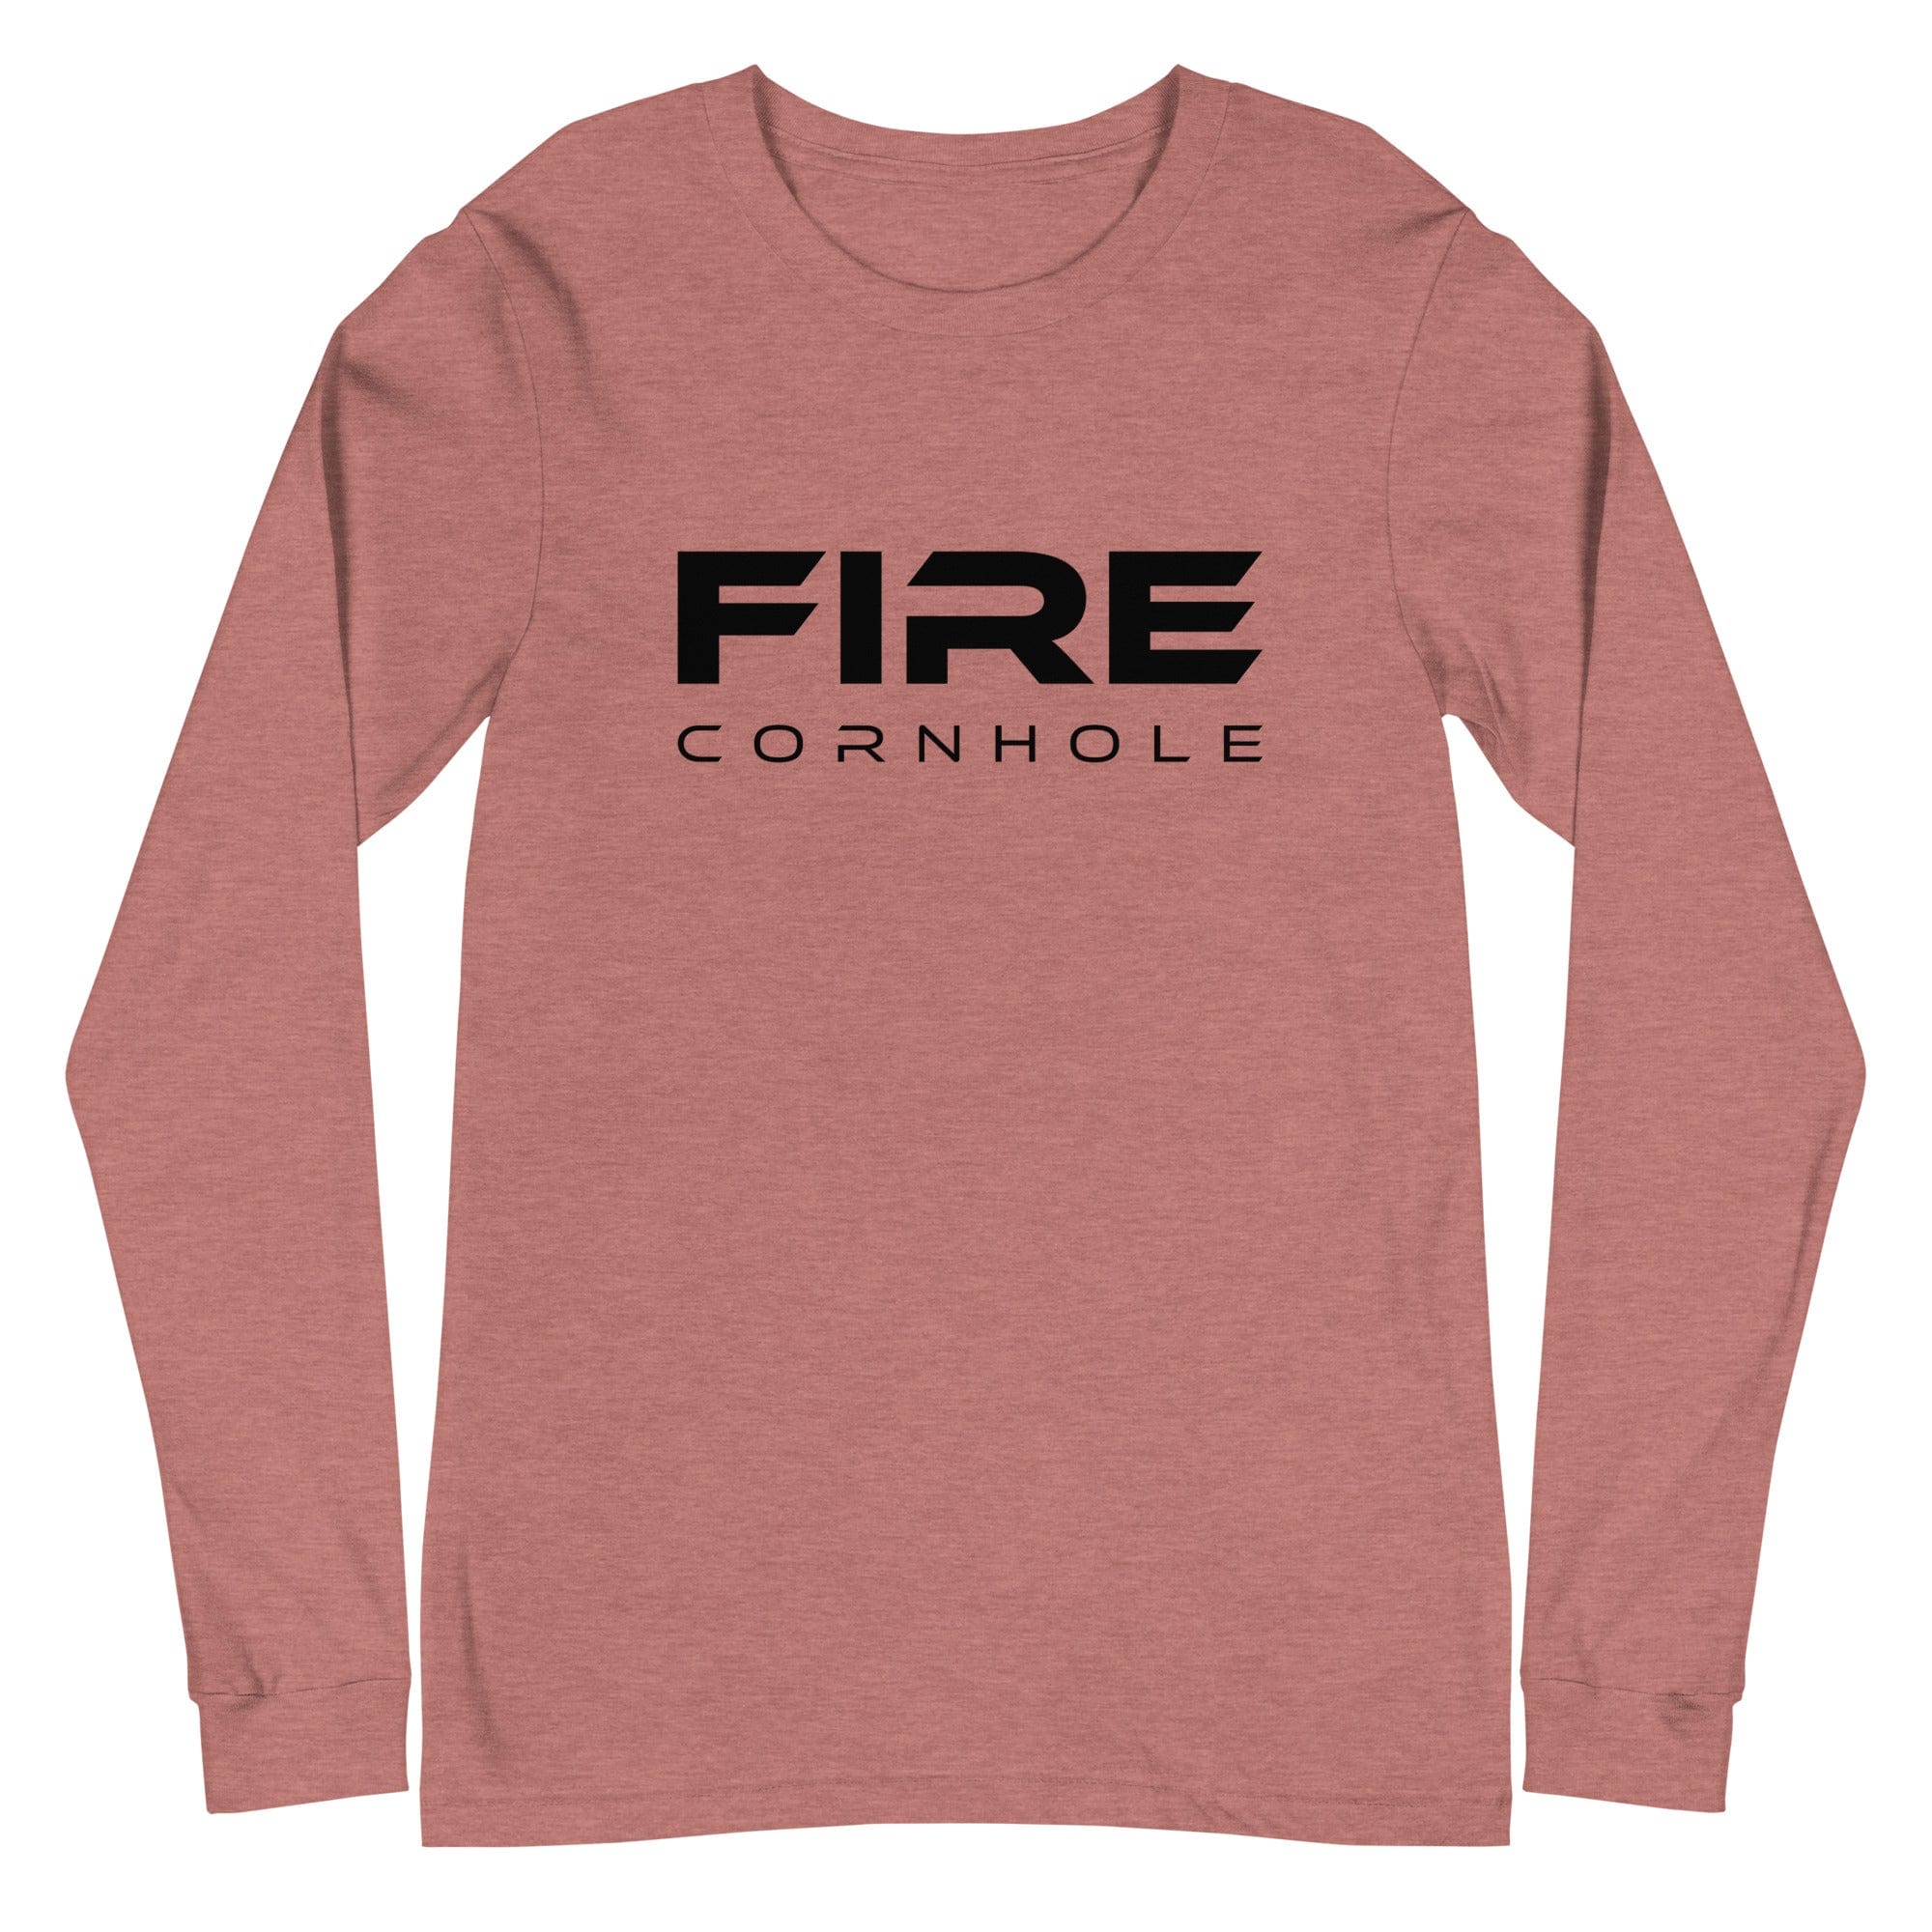 Heathered mauve unisex cotton longsleeve shirt with Fire Cornhole logo in black